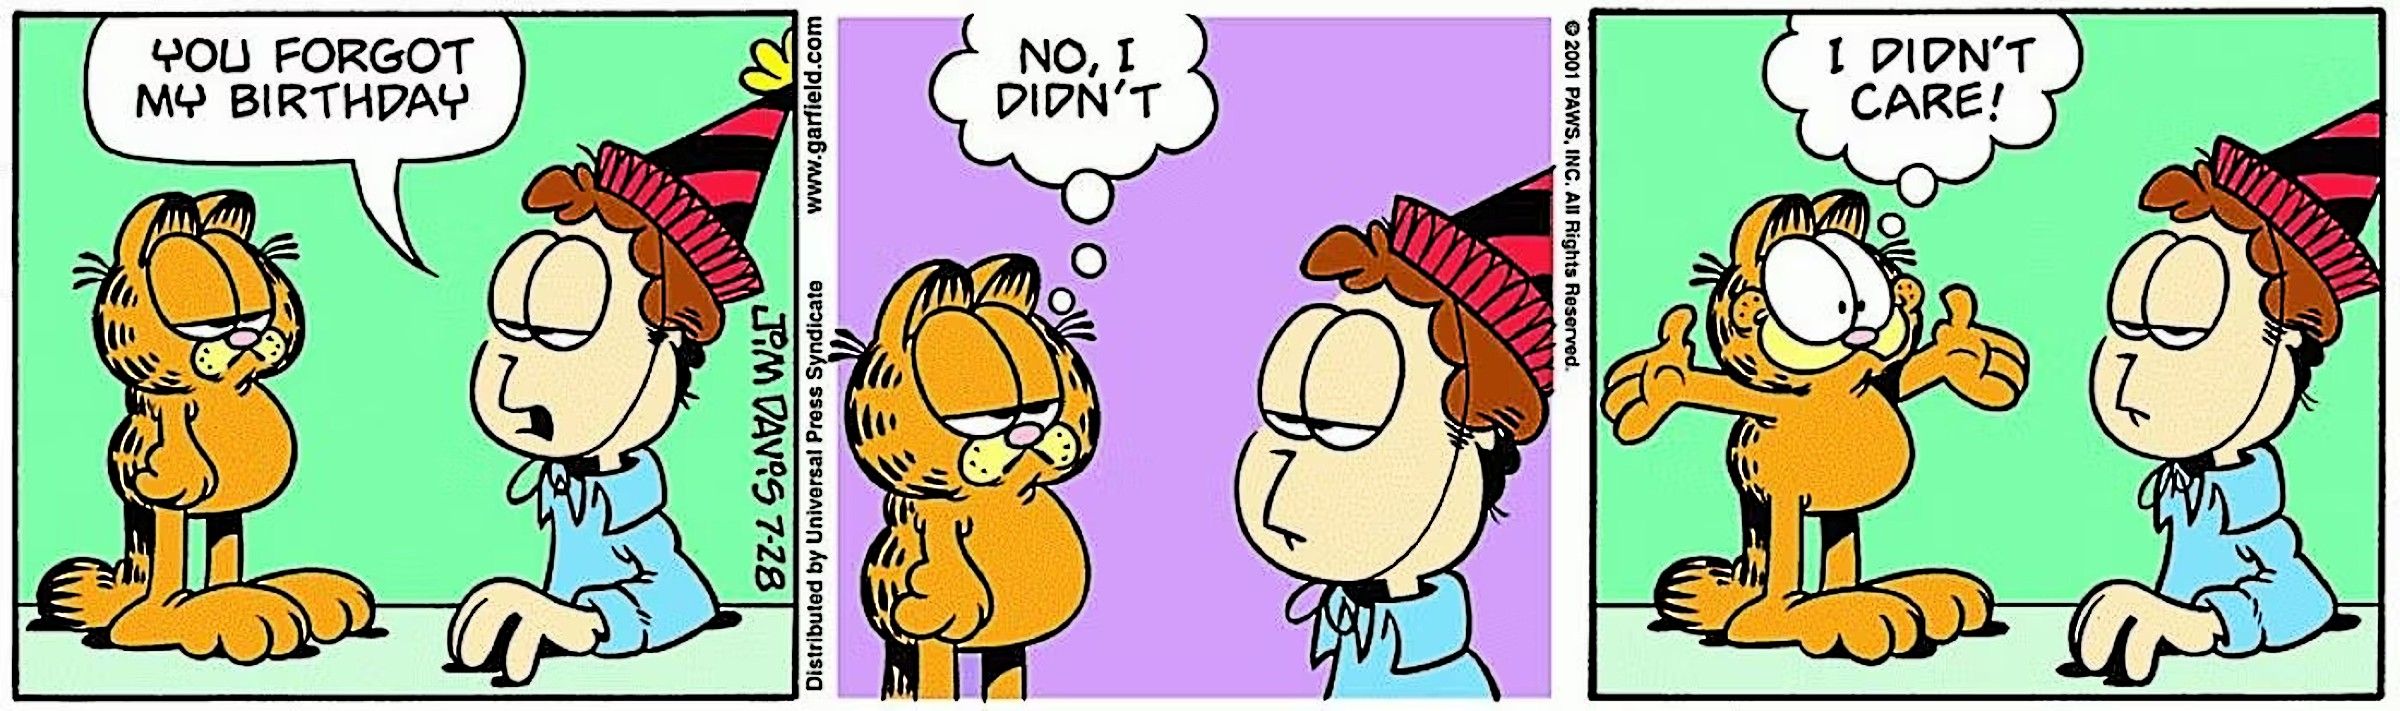 Garfield didn't forget Jon's birthday, he didn't care